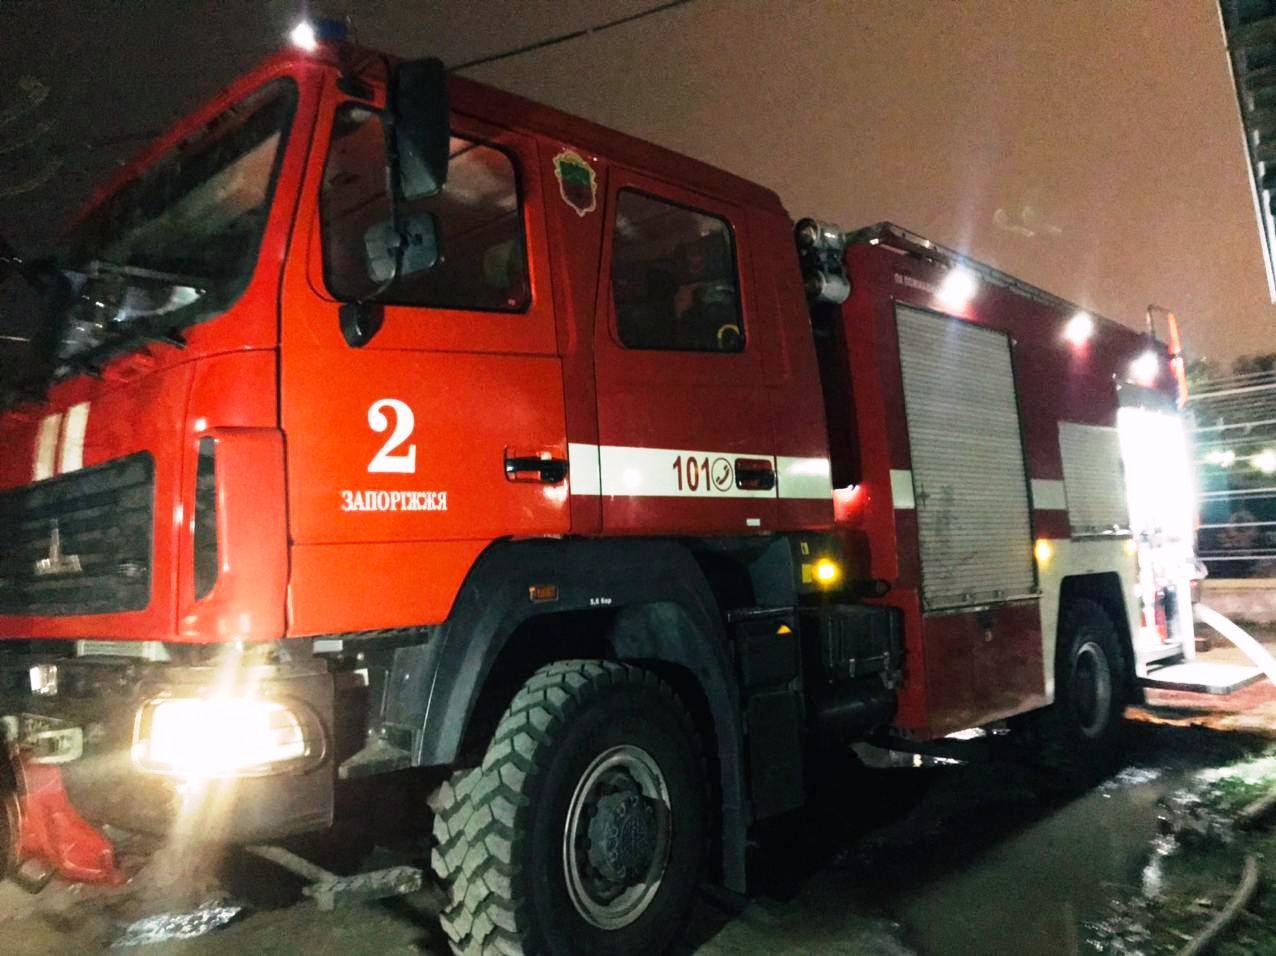 Пожар в центре Запорожья тушили 5 машин спасателей, - ФОТО, фото-4